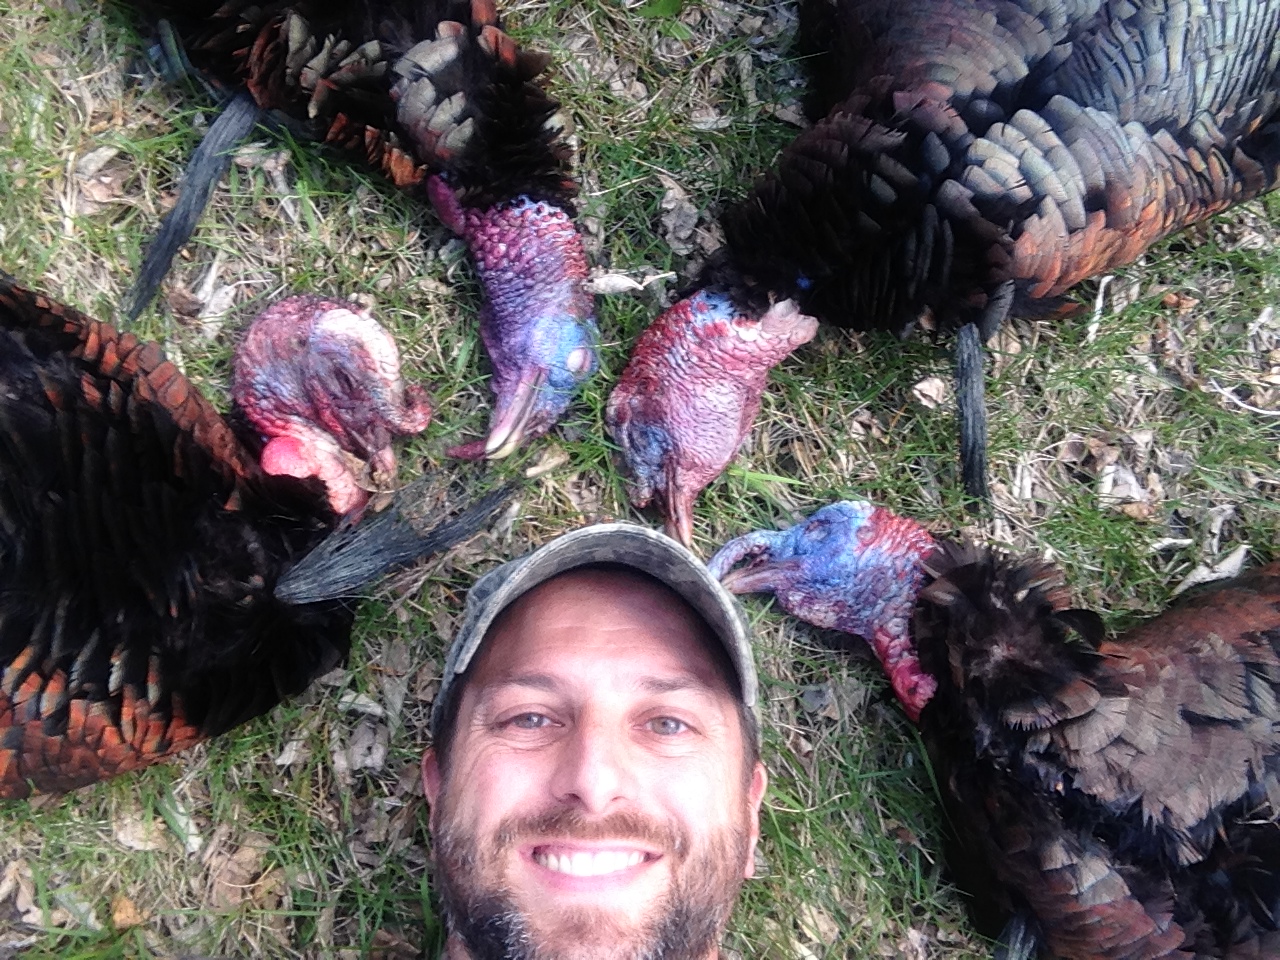 Turkey Season 2014 - Merriam's Wild Turkey Selfie